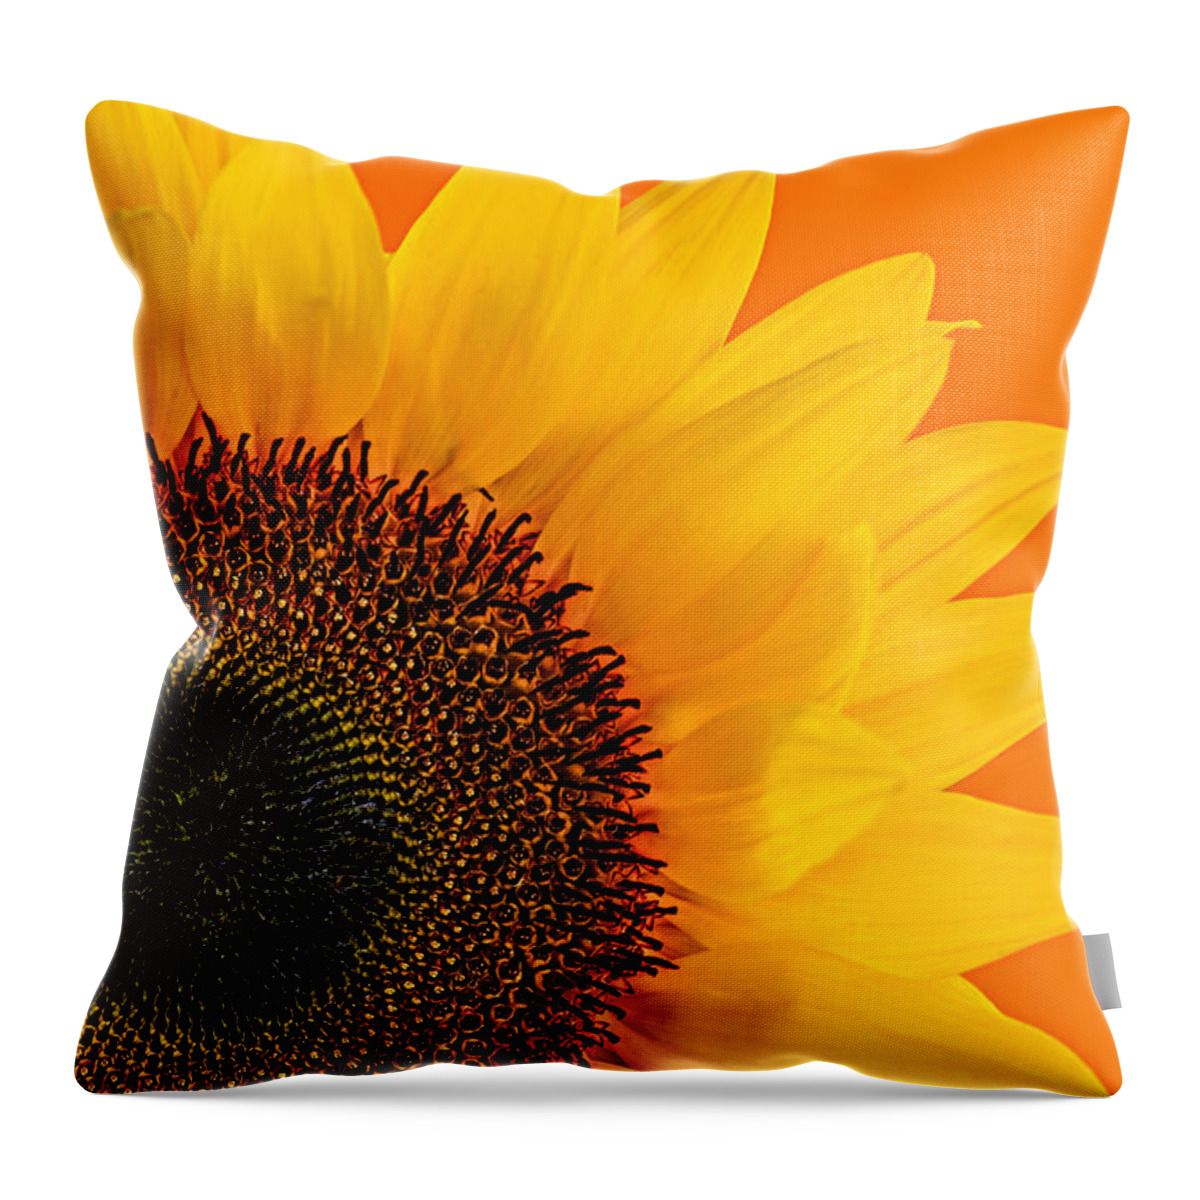 Sunflower Throw Pillow featuring the photograph Sunflower closeup 2 by Elena Elisseeva